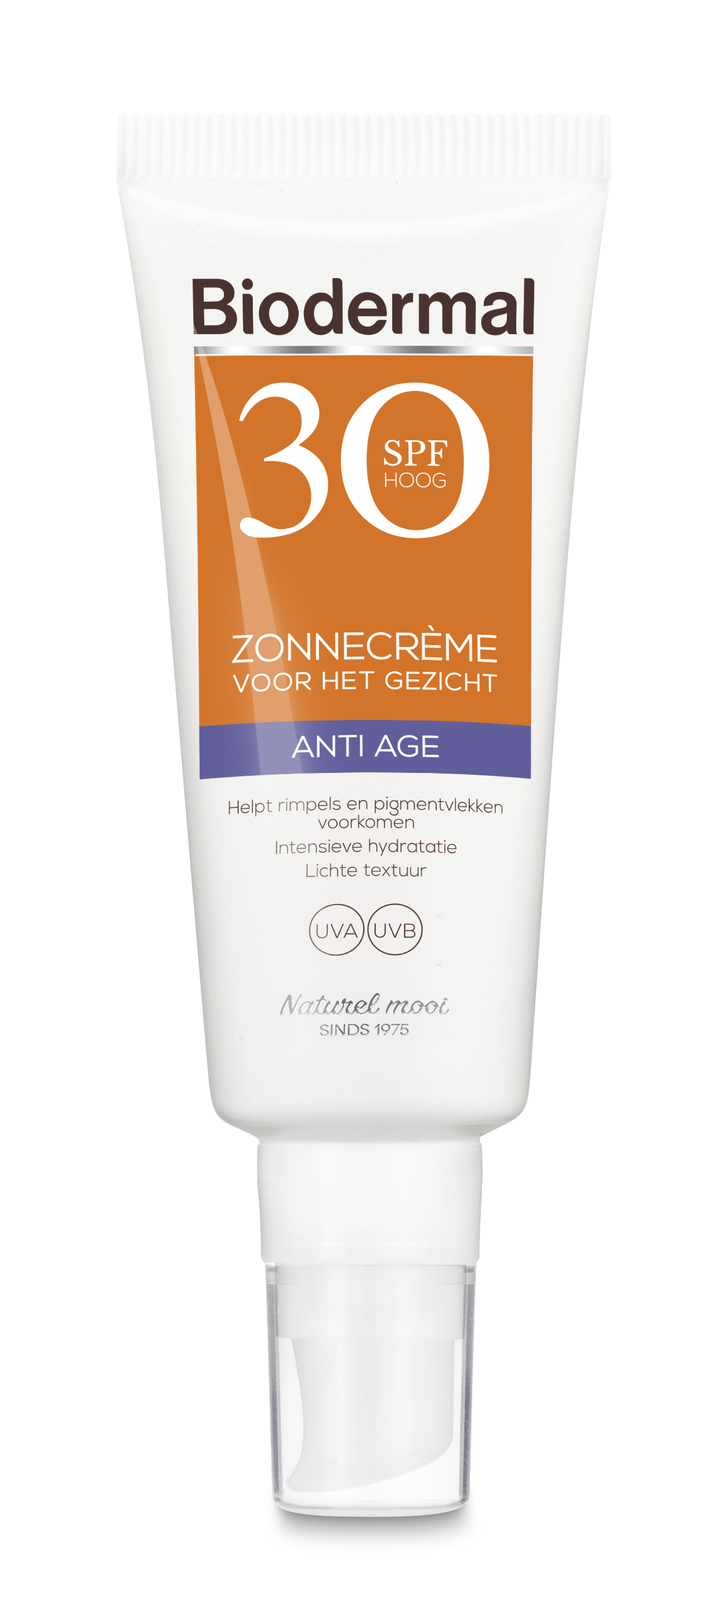 Image of Biodermal Anti Age Zonnecrème Gezicht SPF30